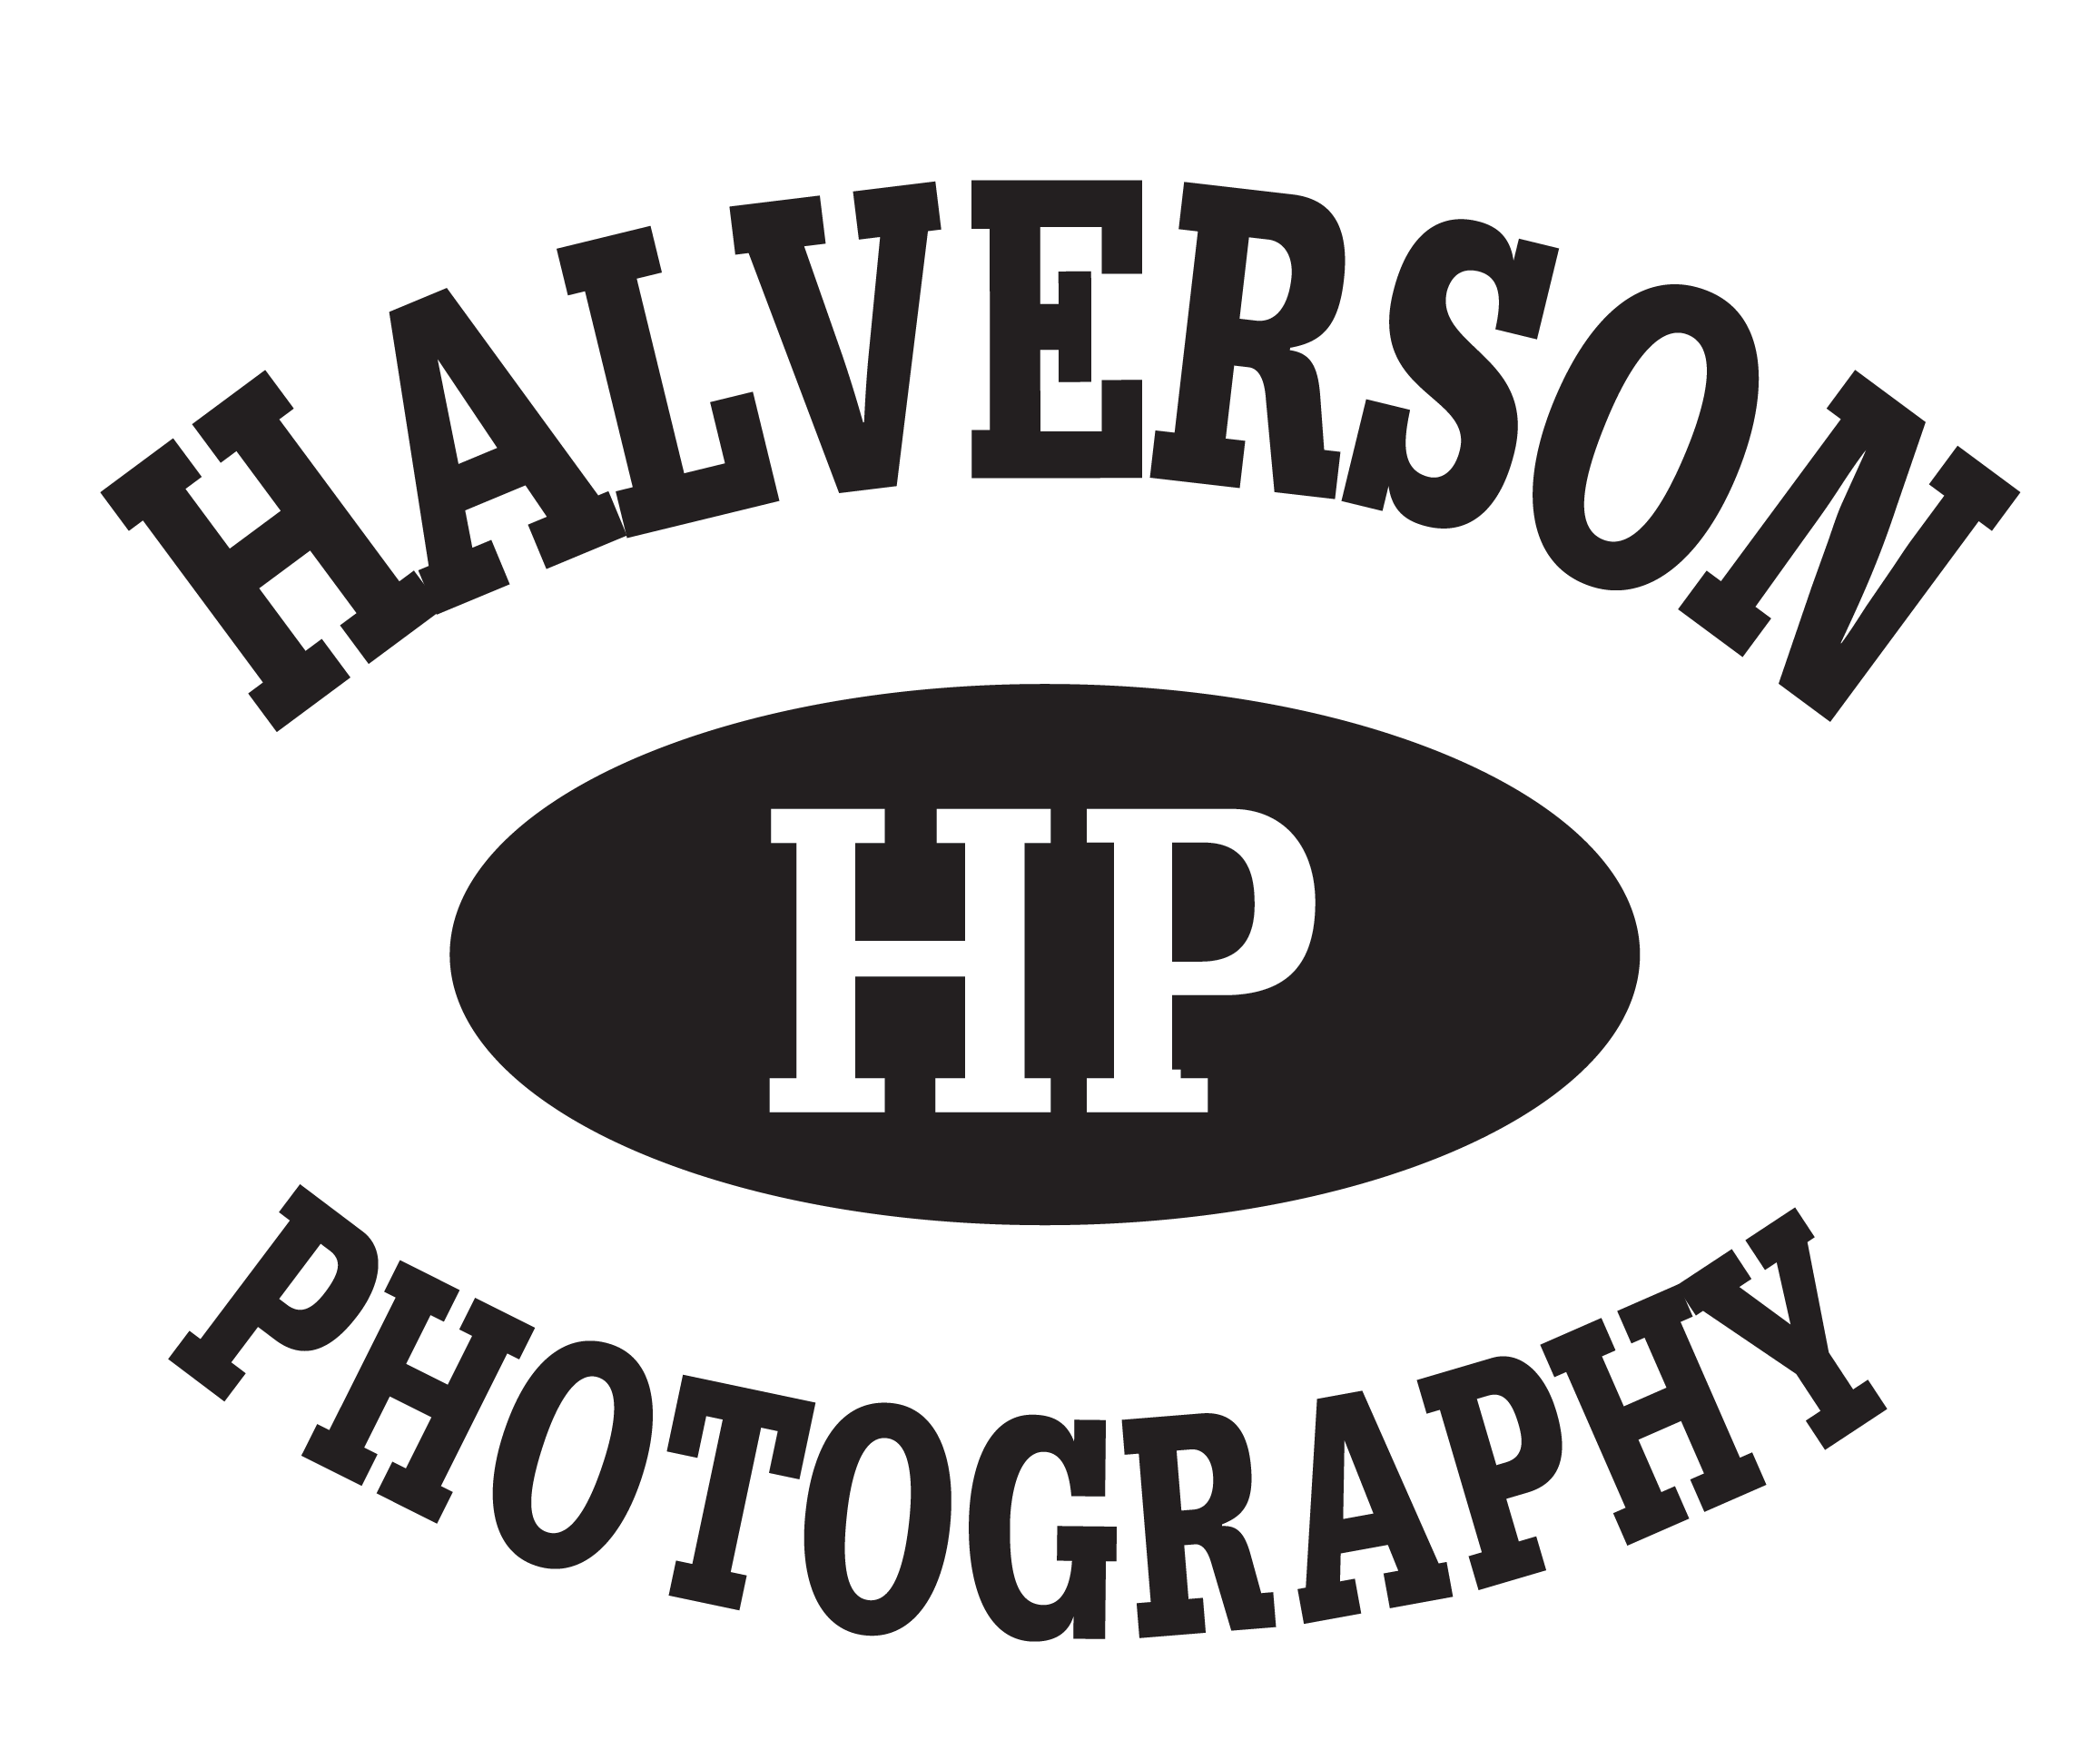 Halverson logo